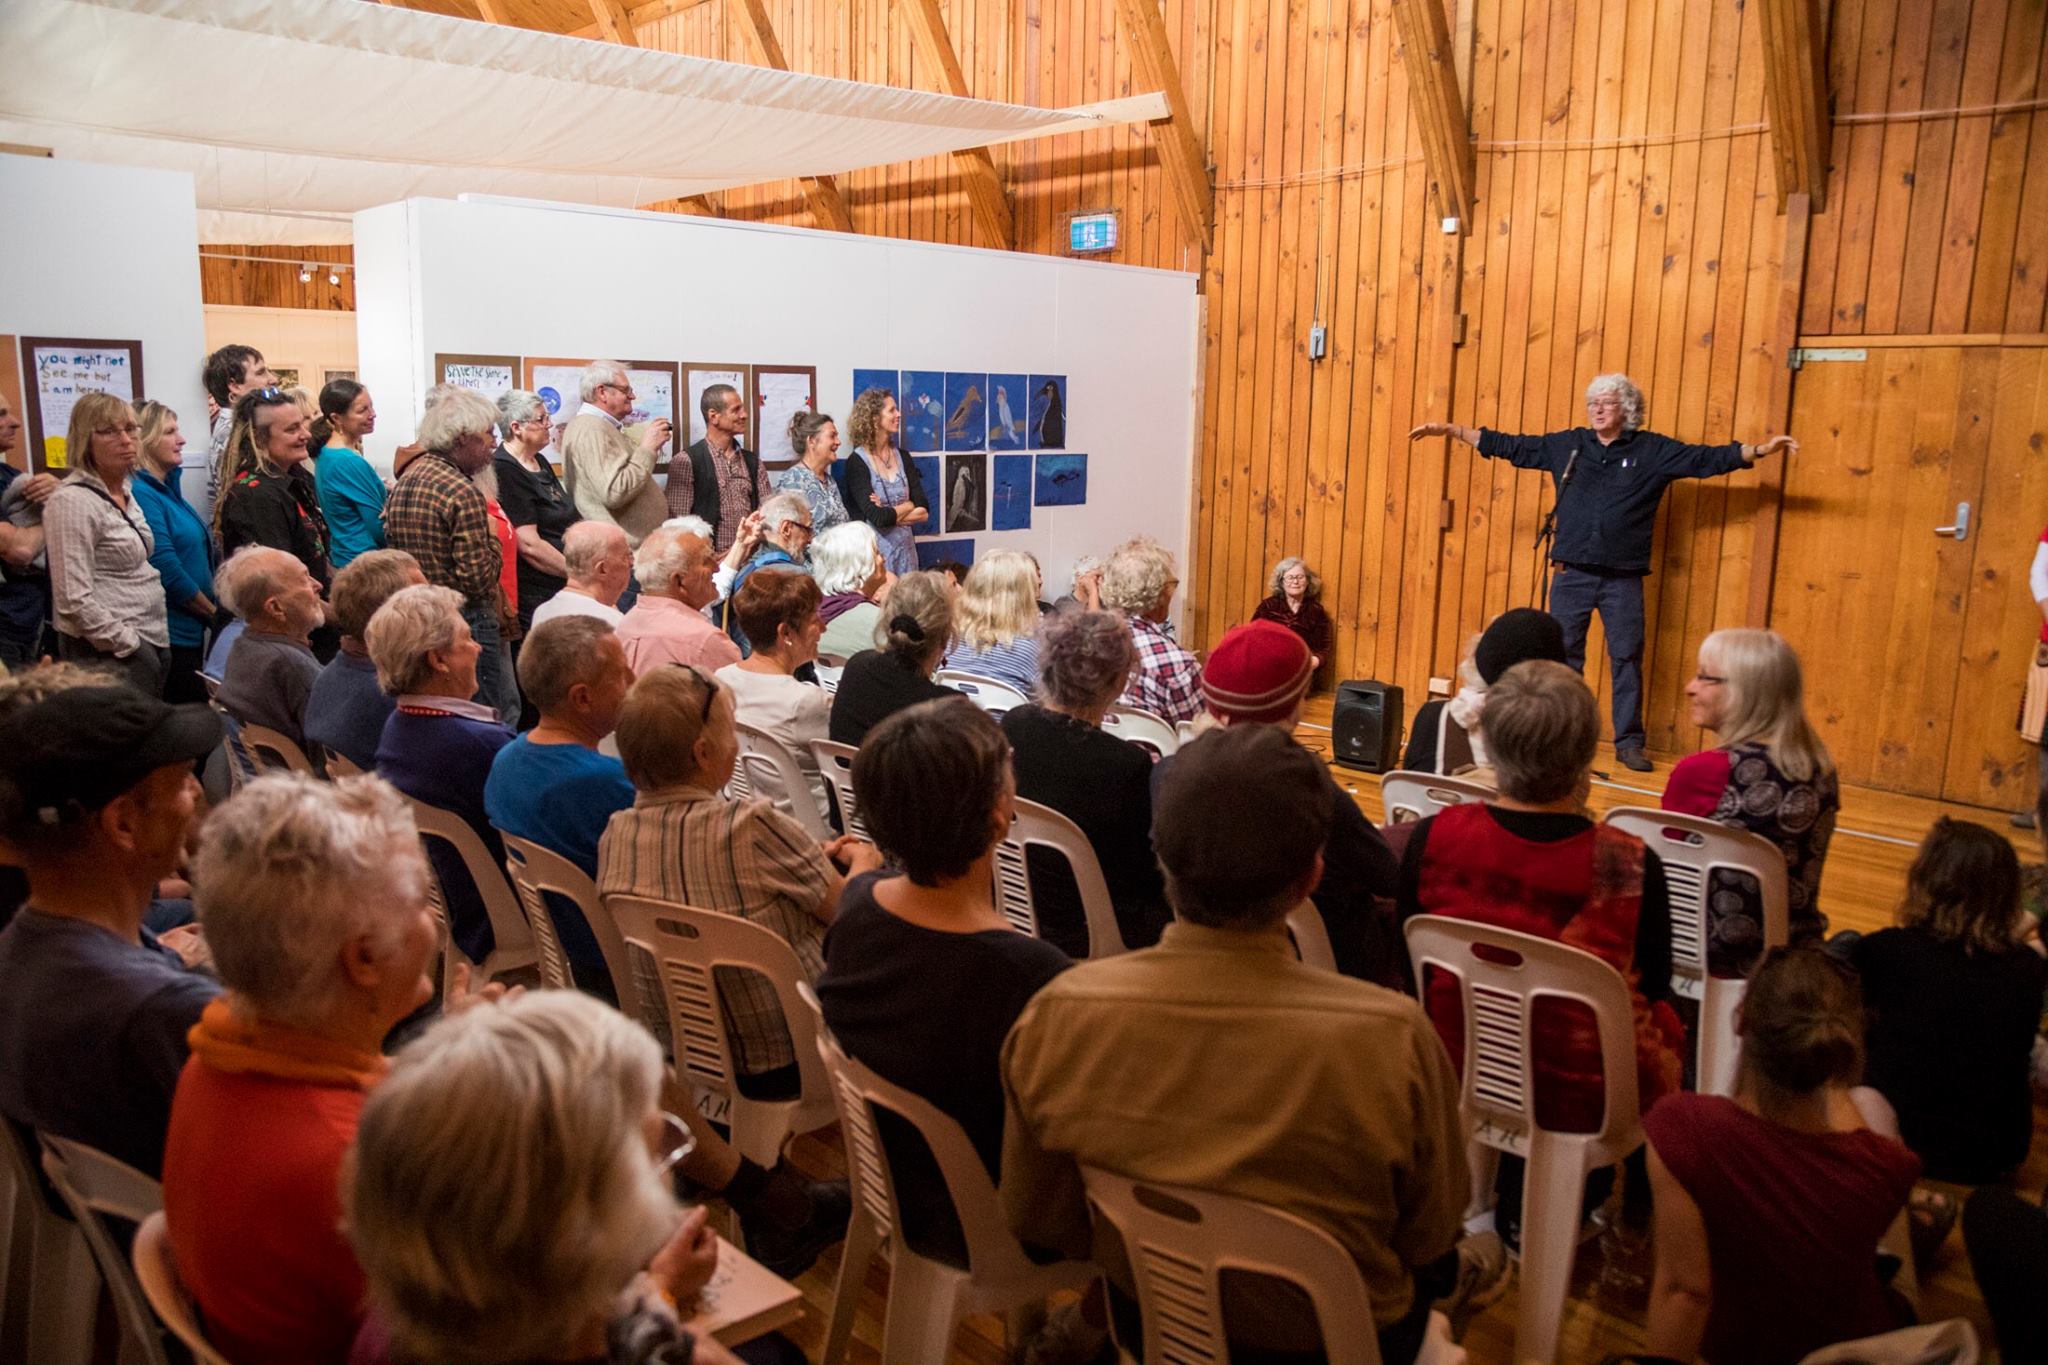 Evening talks at the Bruny Island Bird festival Profile story with Art Trails Tasmania